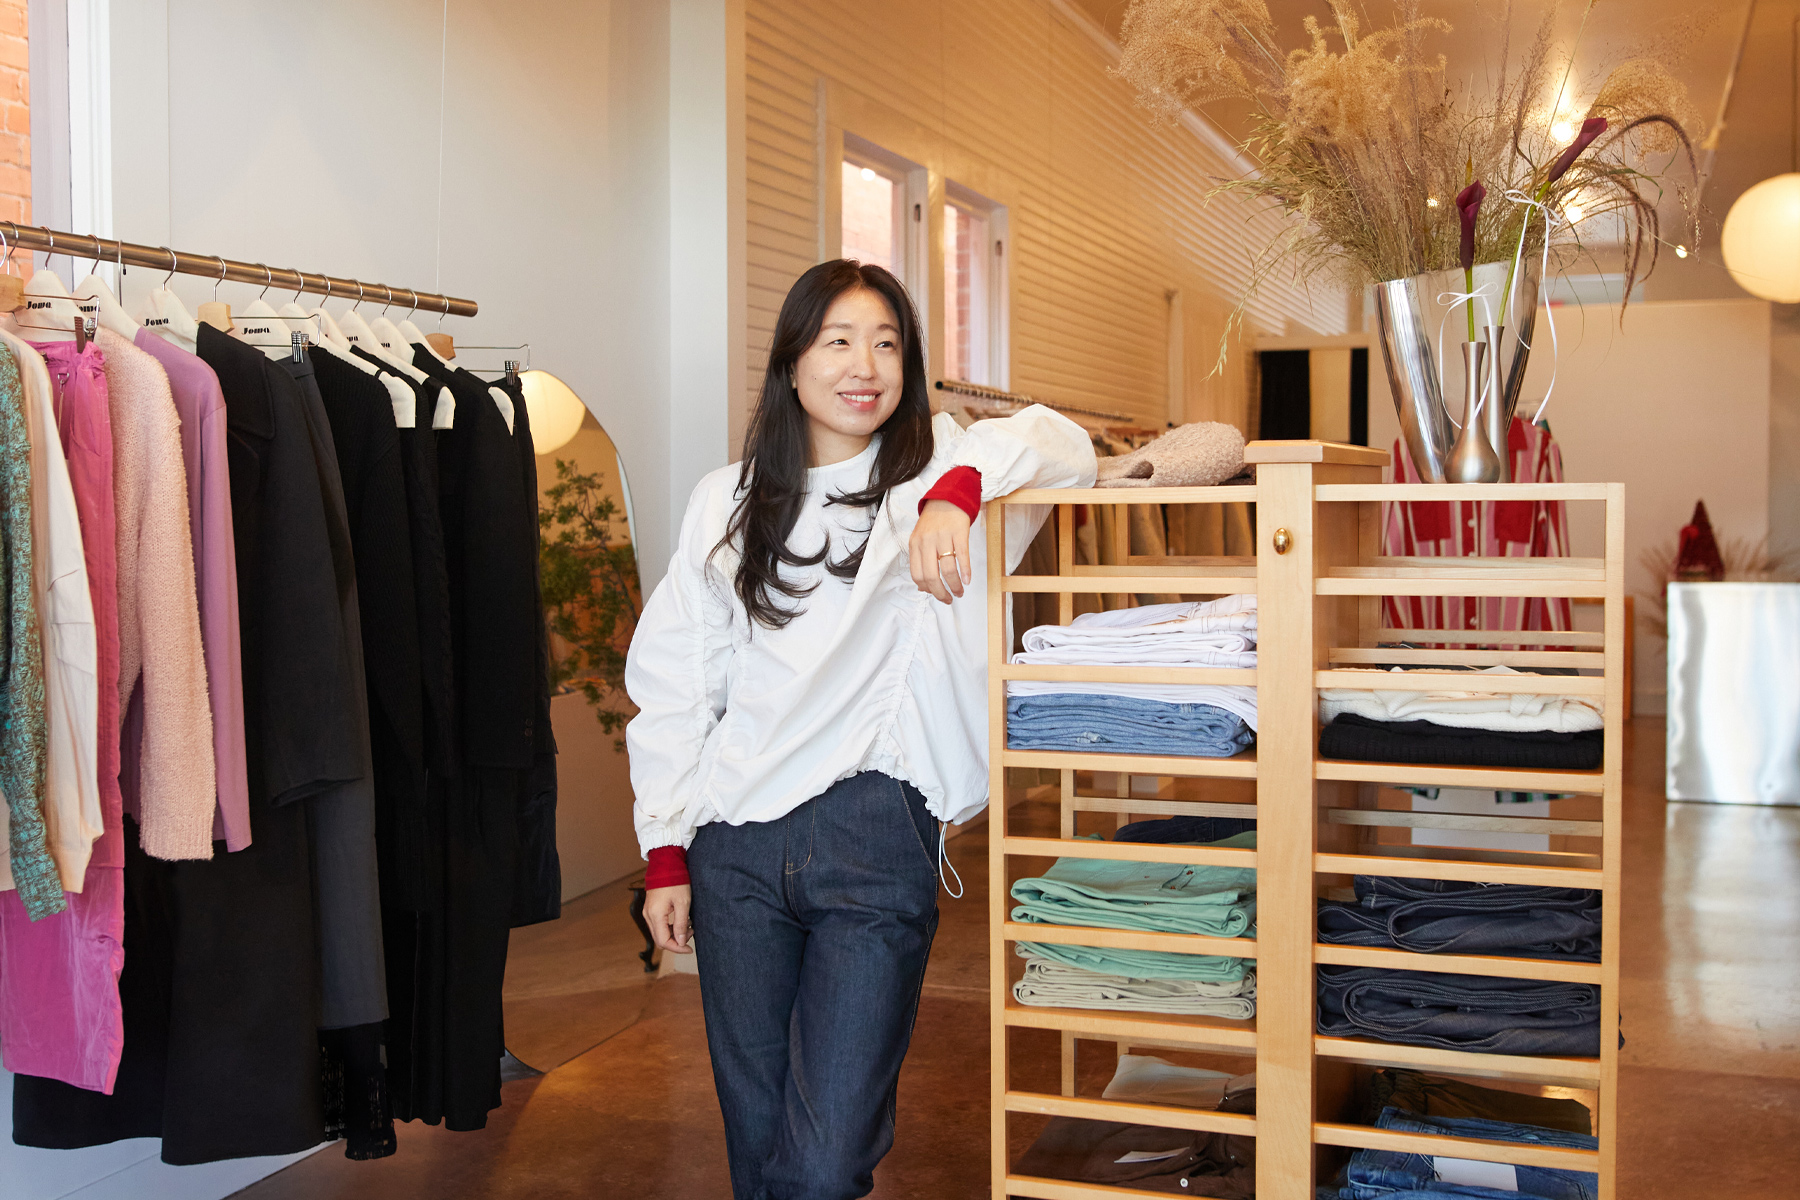 Shop South Korean Fashion at This Bishop Arts Boutique – D Magazine